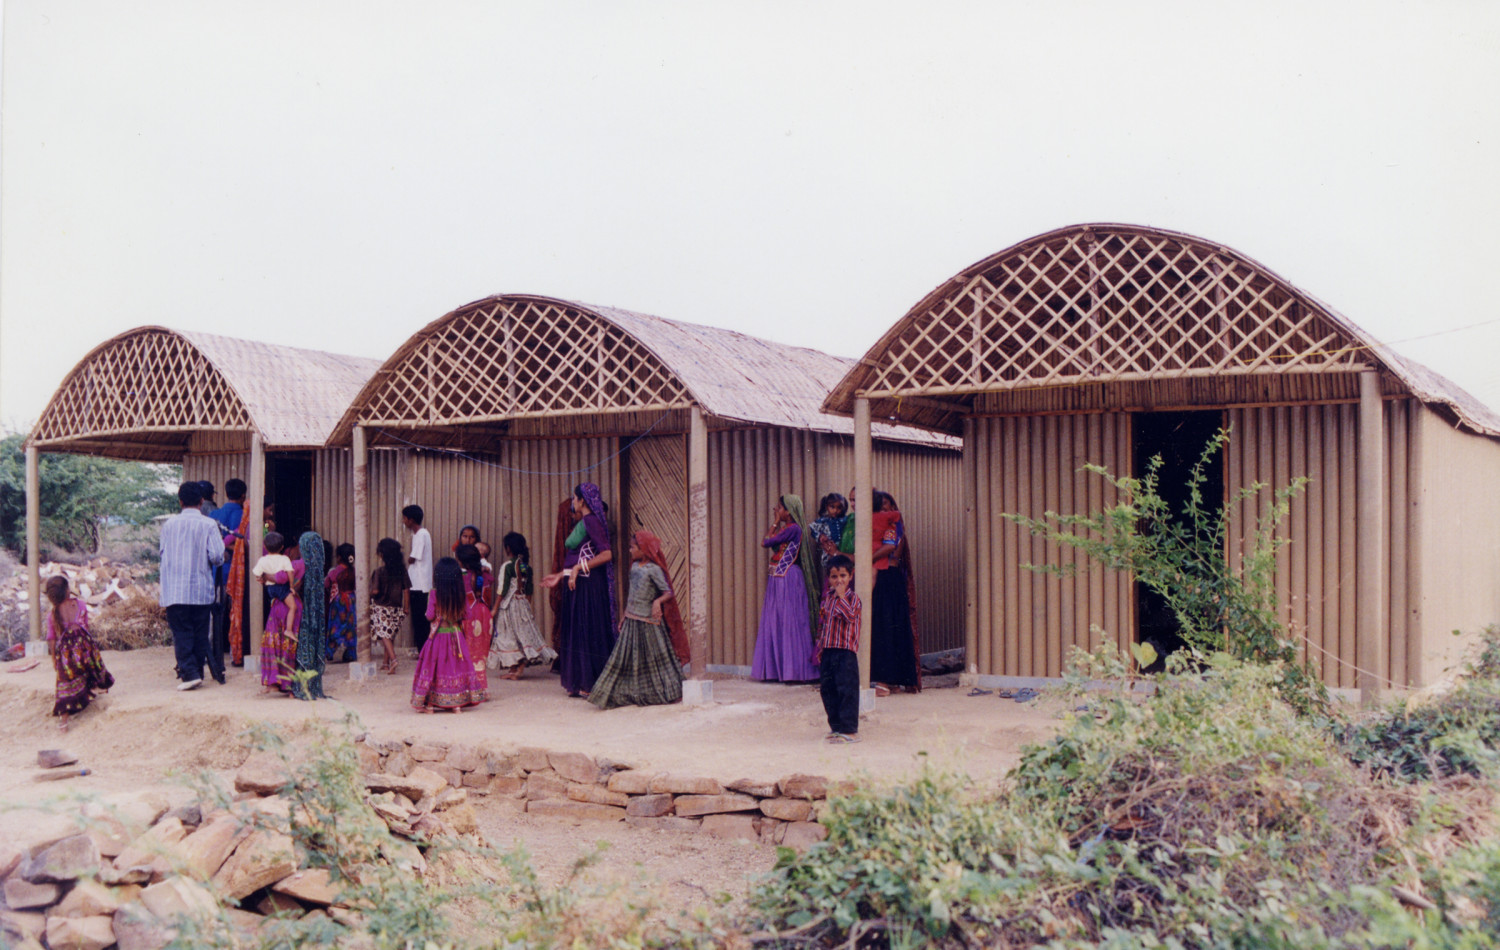 Shigeru Ban Paper Log House, Bhuj, India 2001, Photo by Kartikeya Shodhan